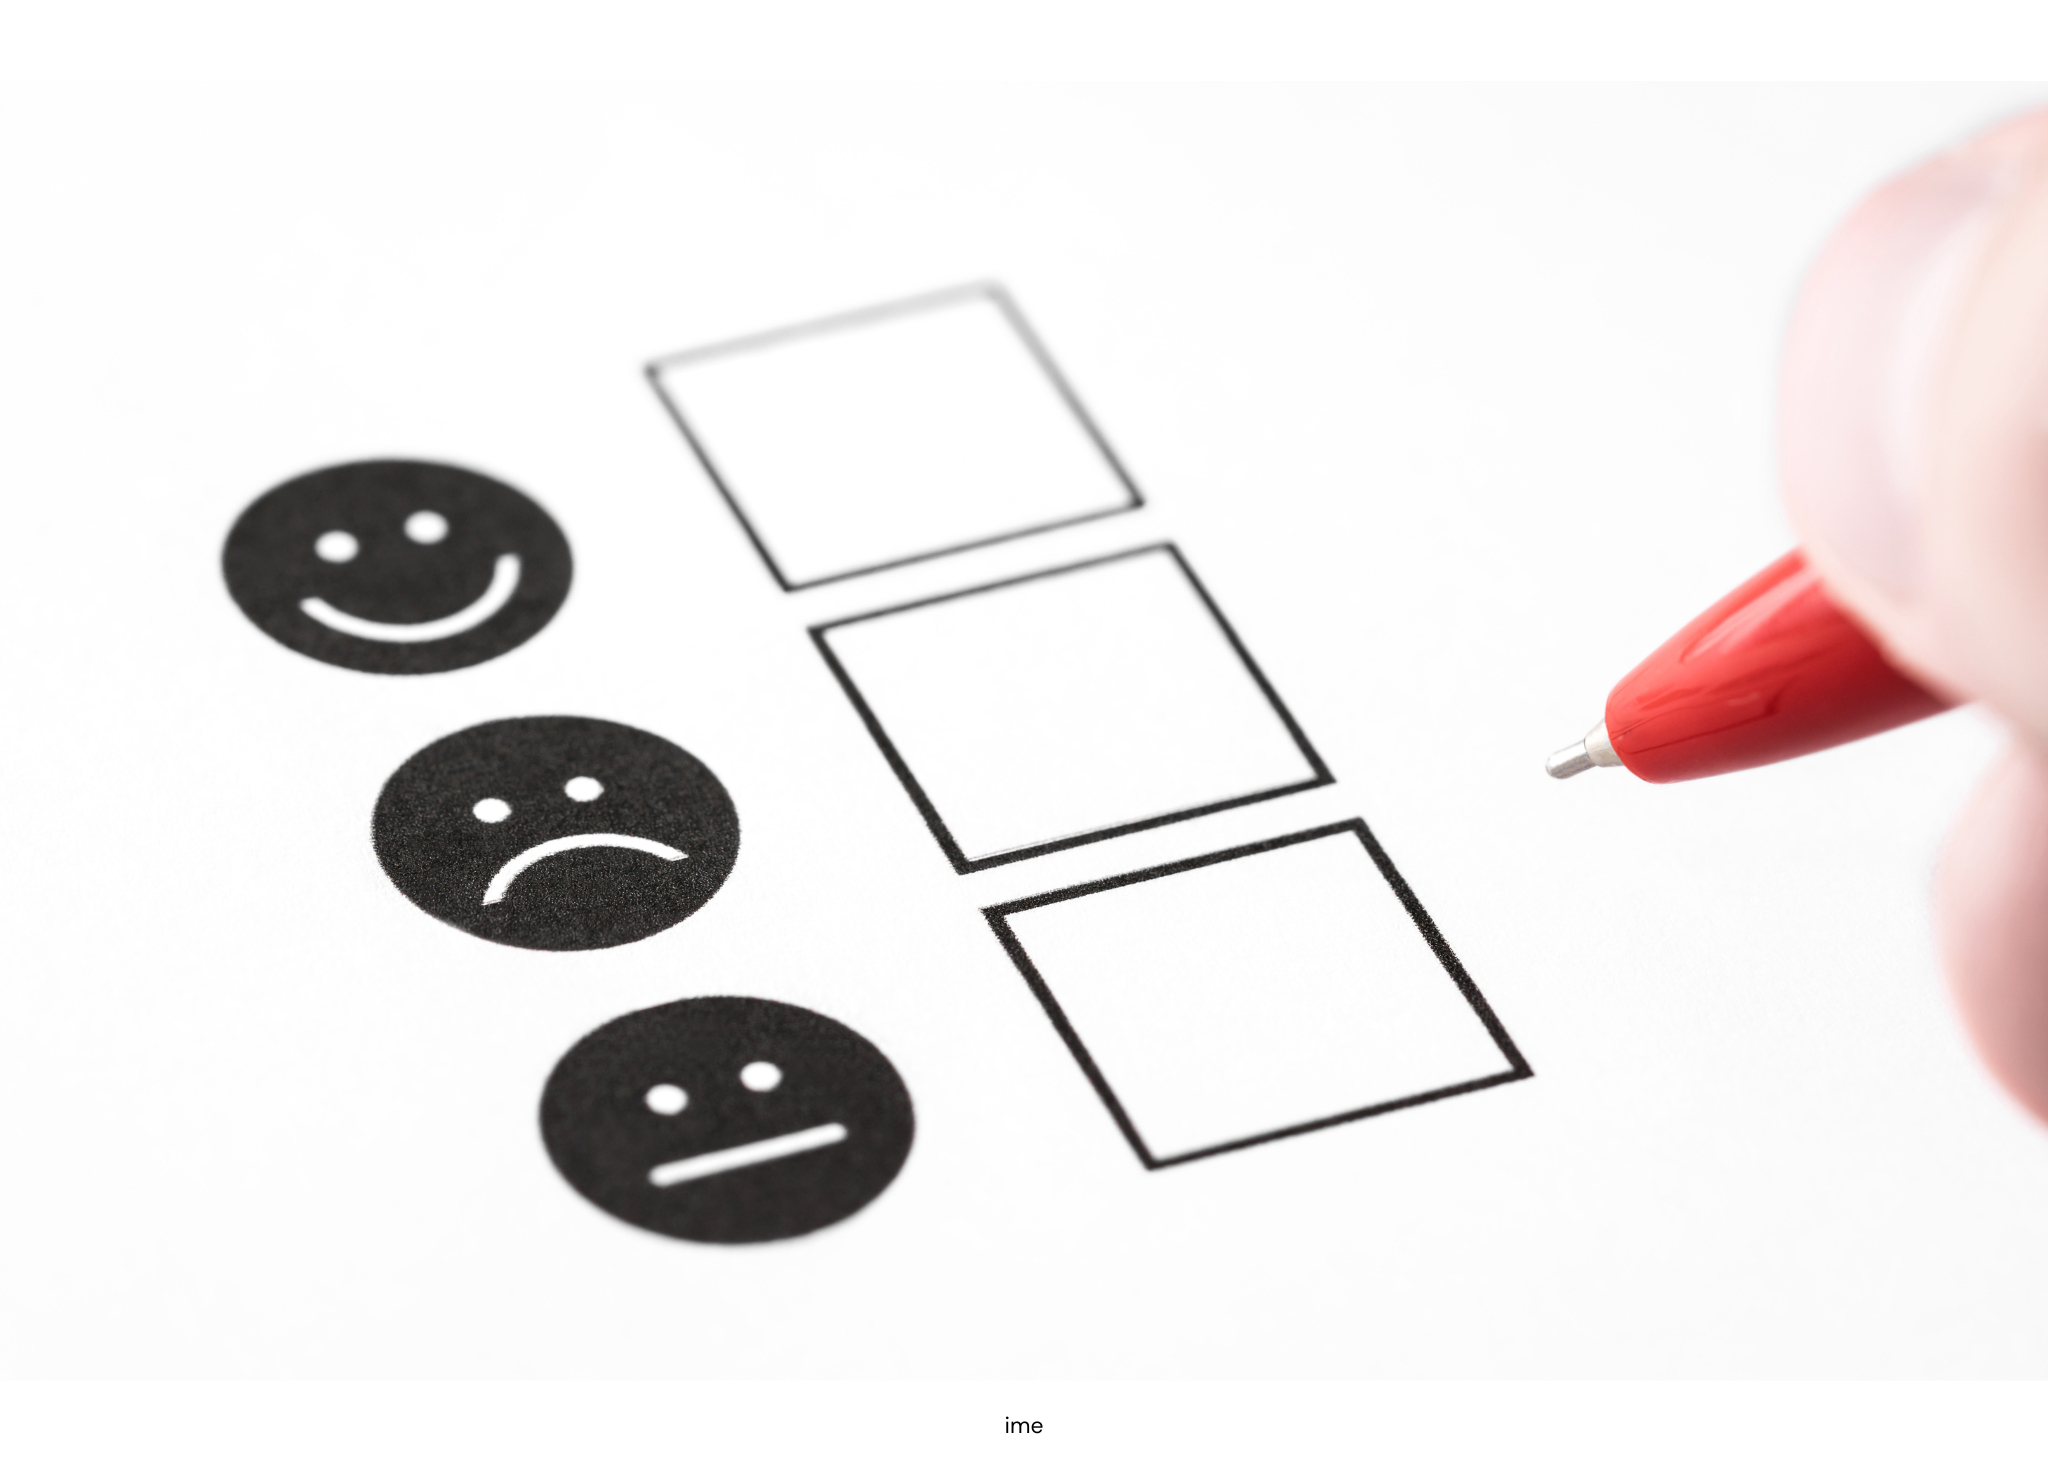 Satisfaction surveys online